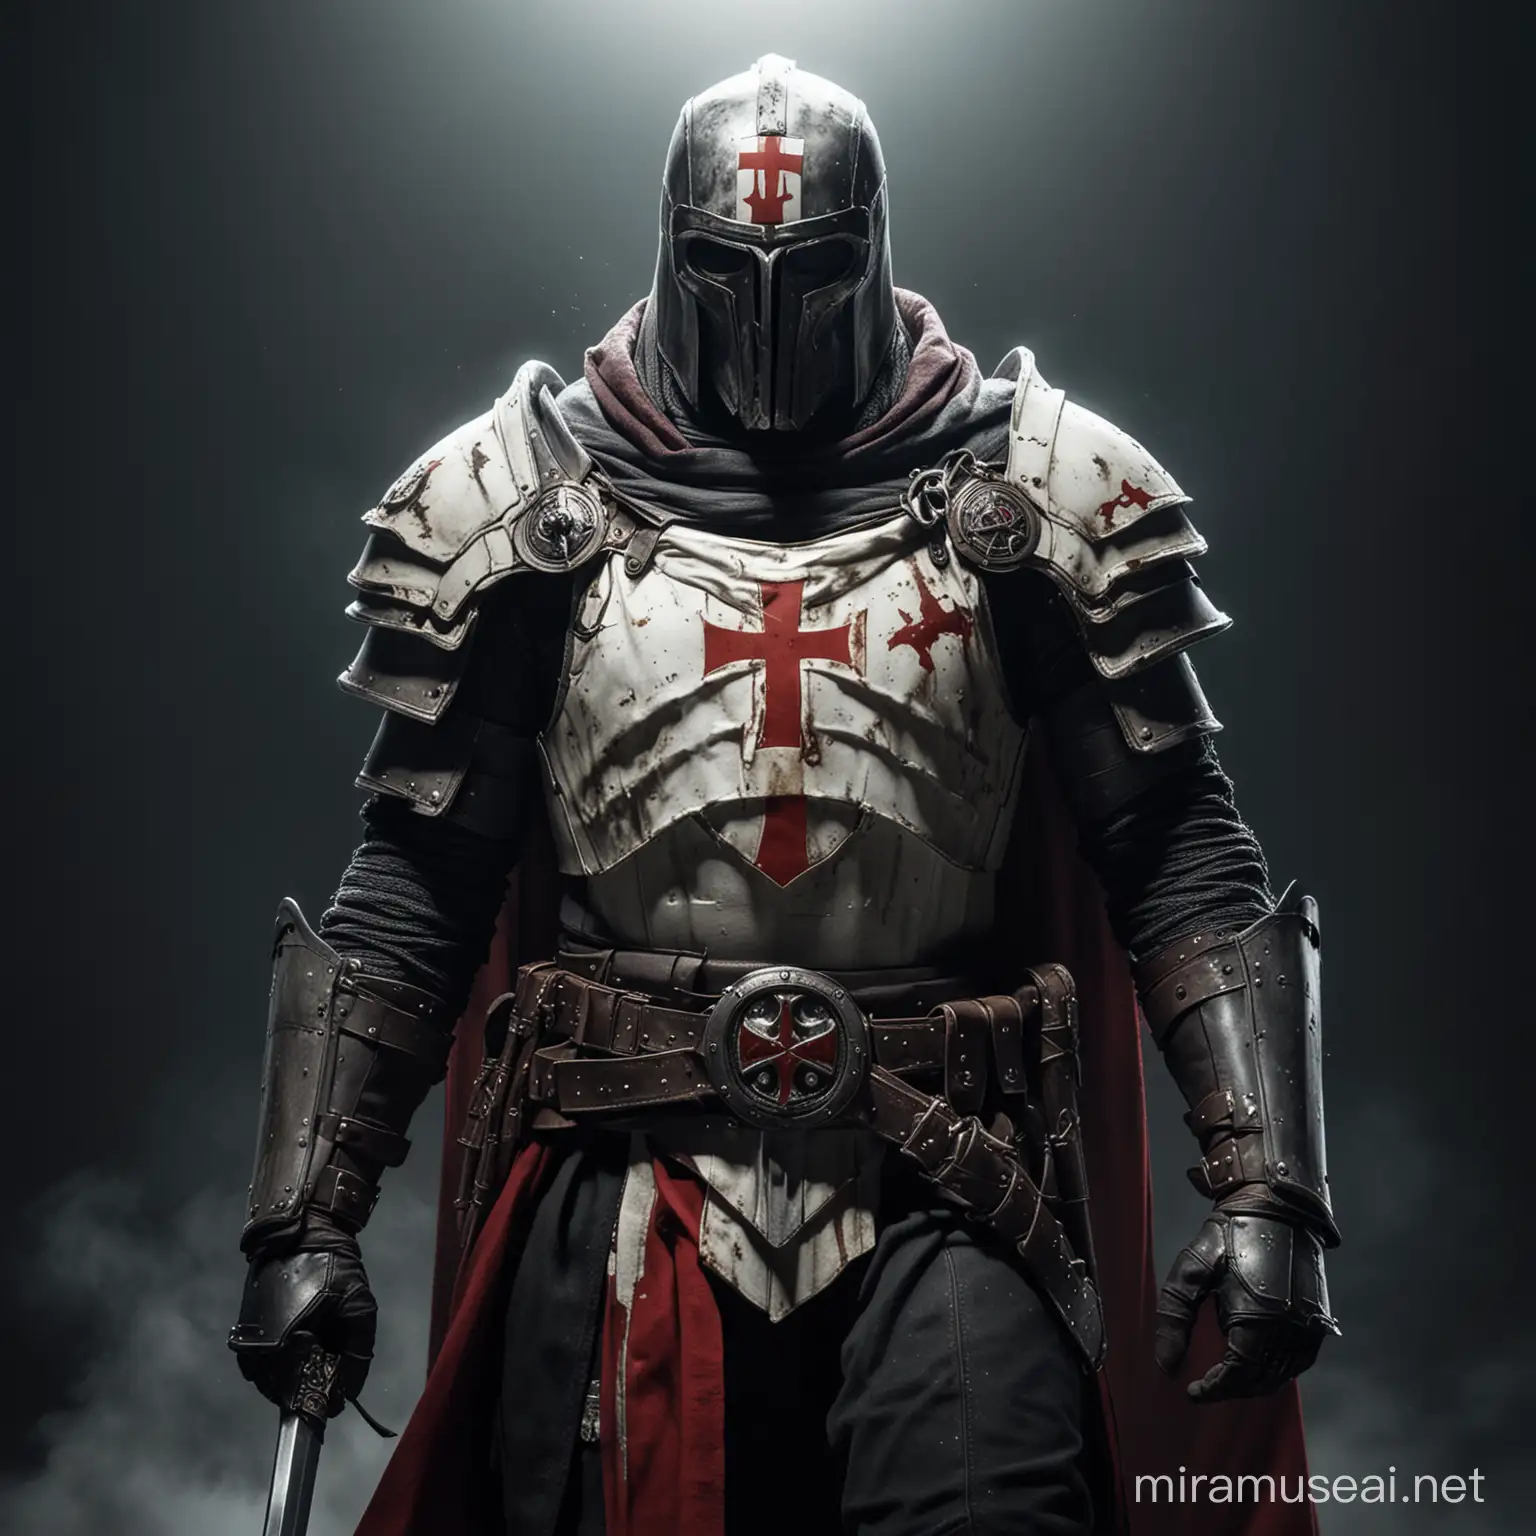 A night Templar, standing majestically, close view